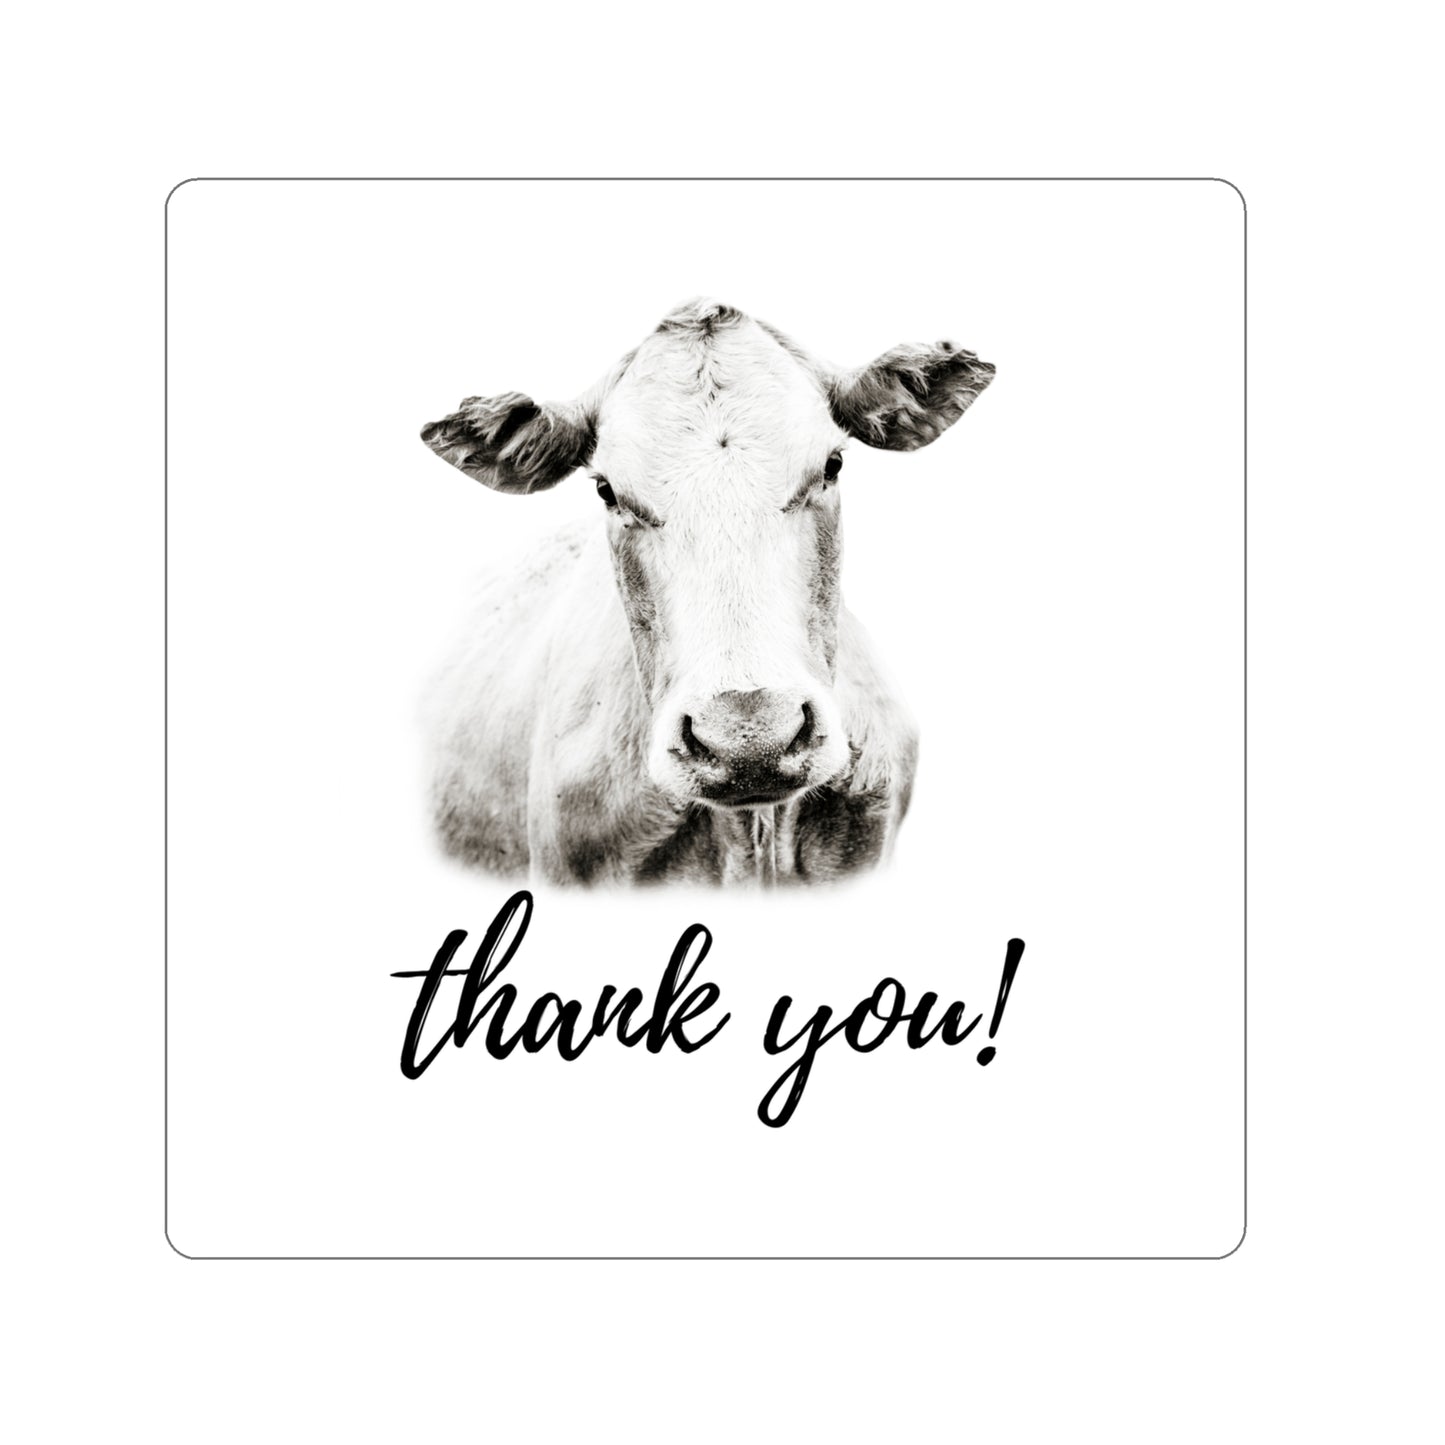 White Cow Charolais Farm Animal Thanks You Die Cut Sticker